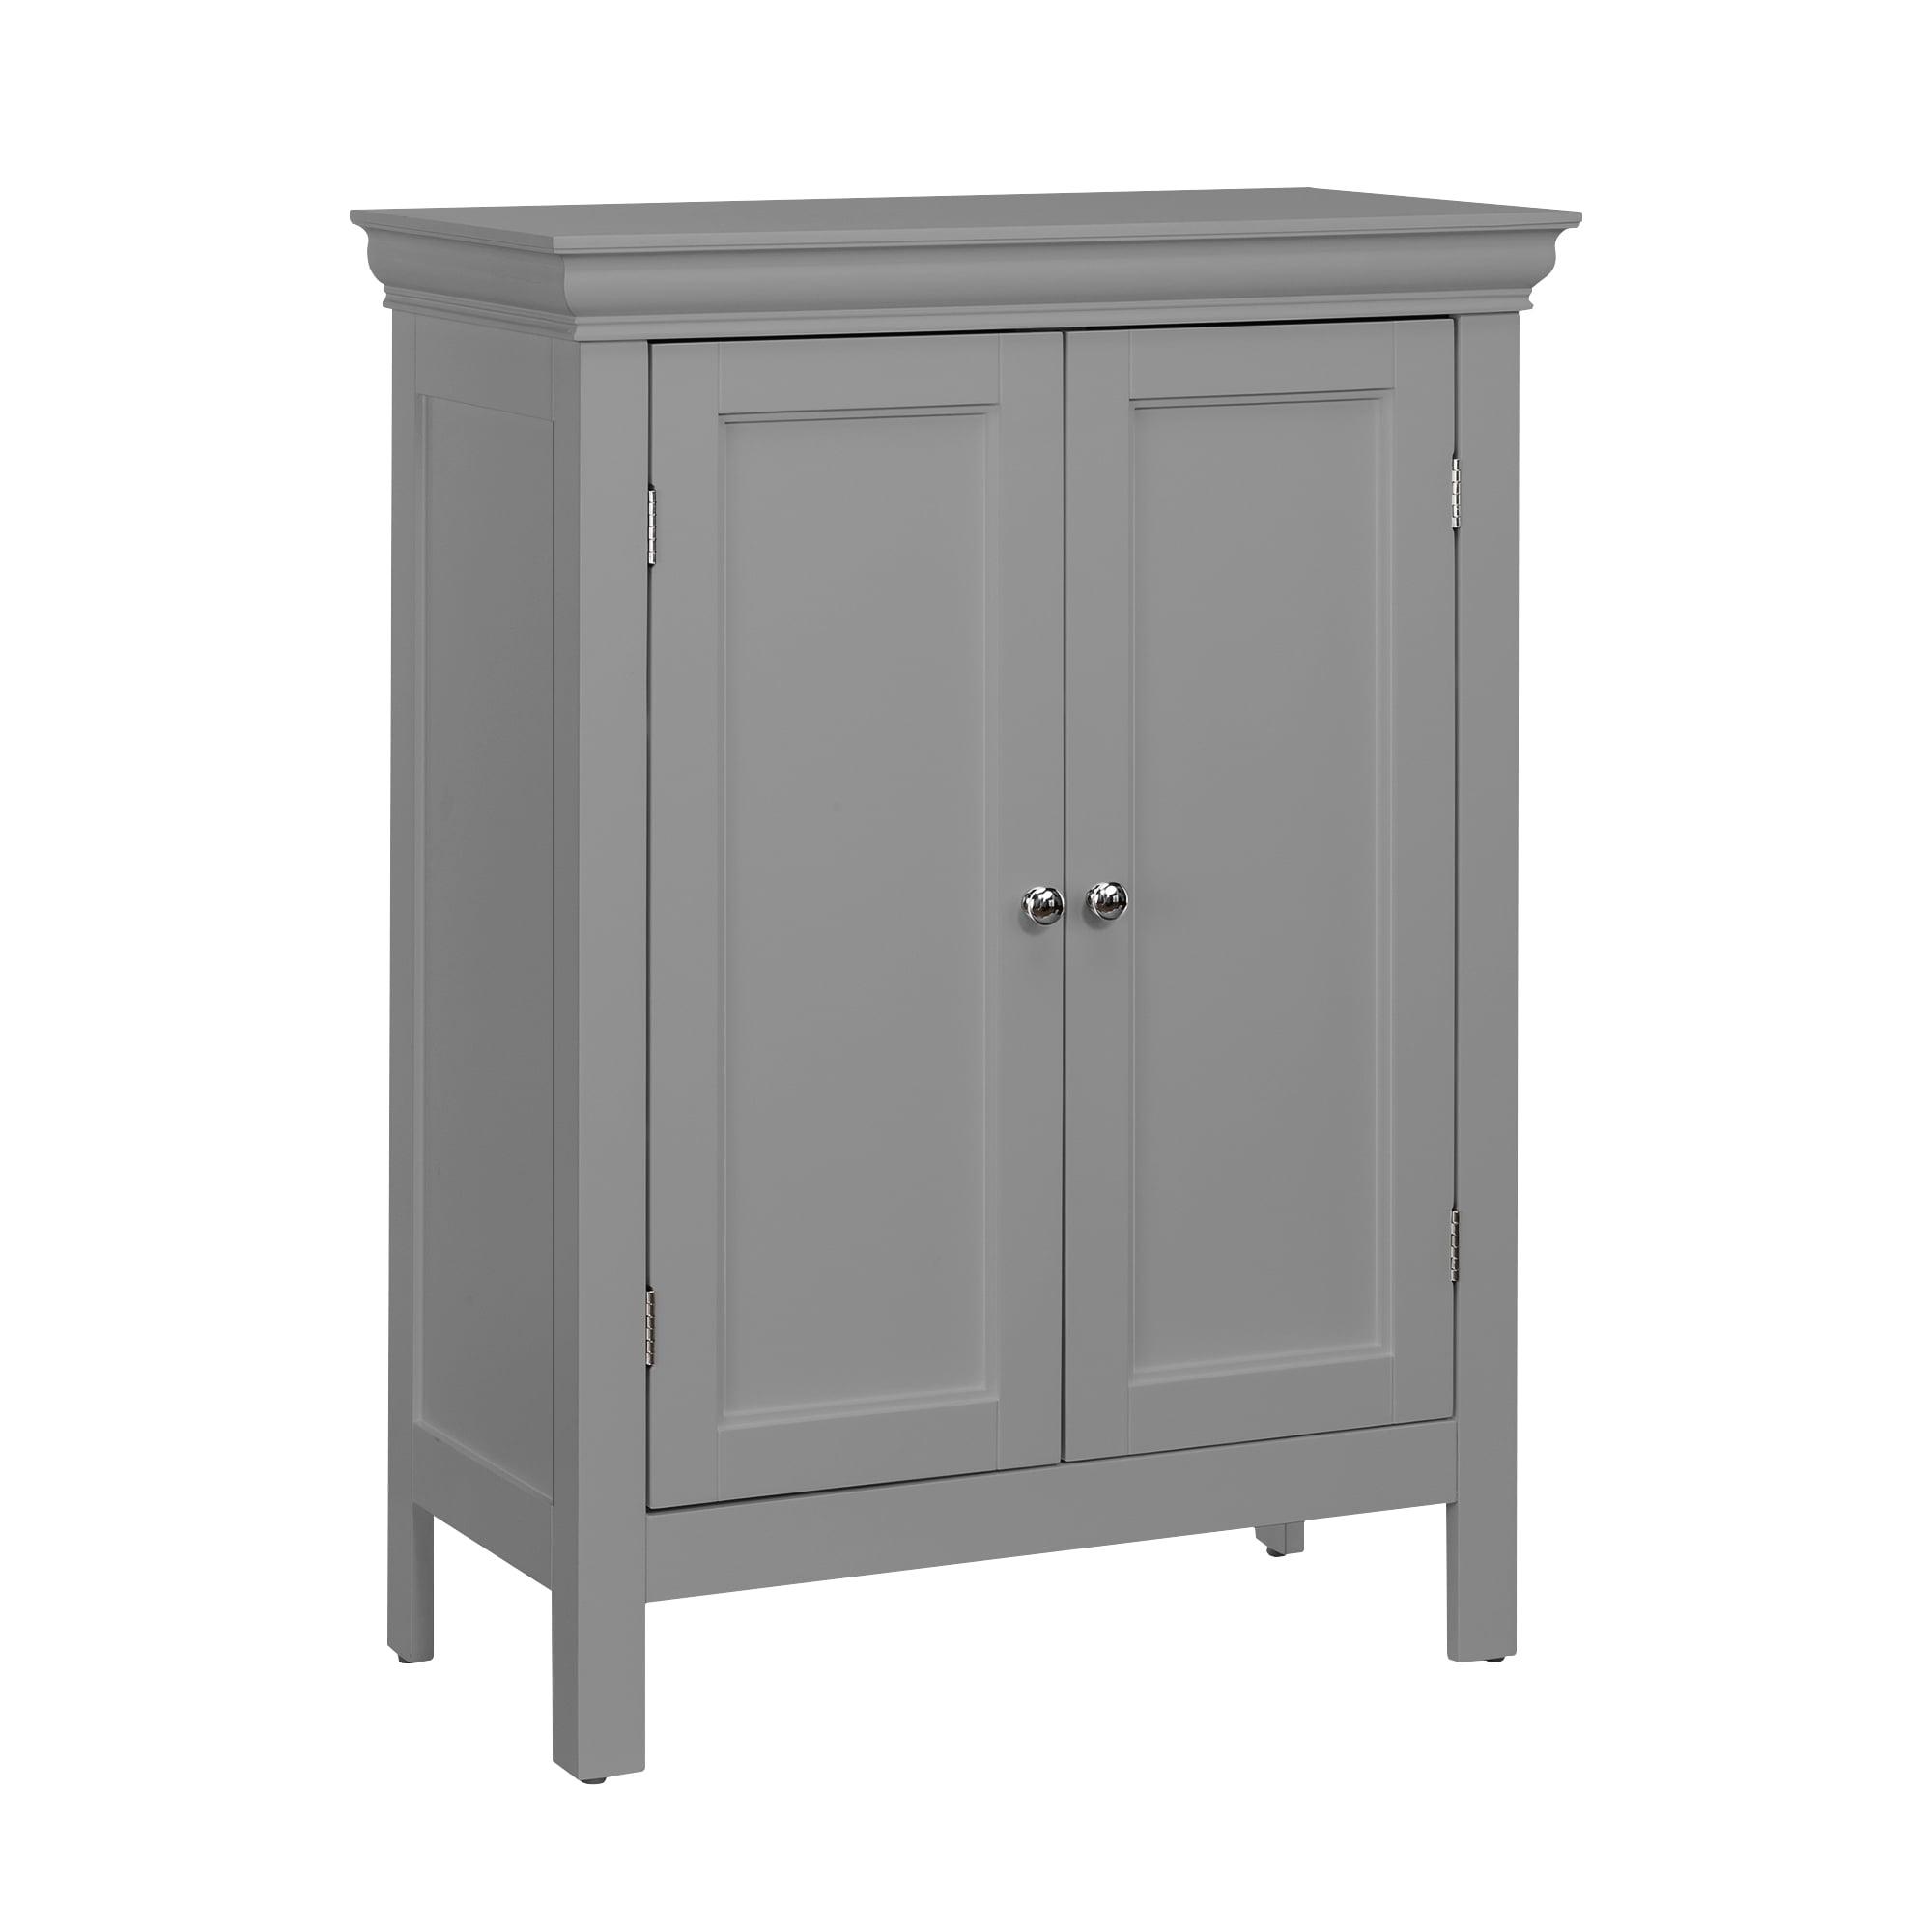 Stratford Sleek Gray Adjustable Shelving Living Room Cabinet